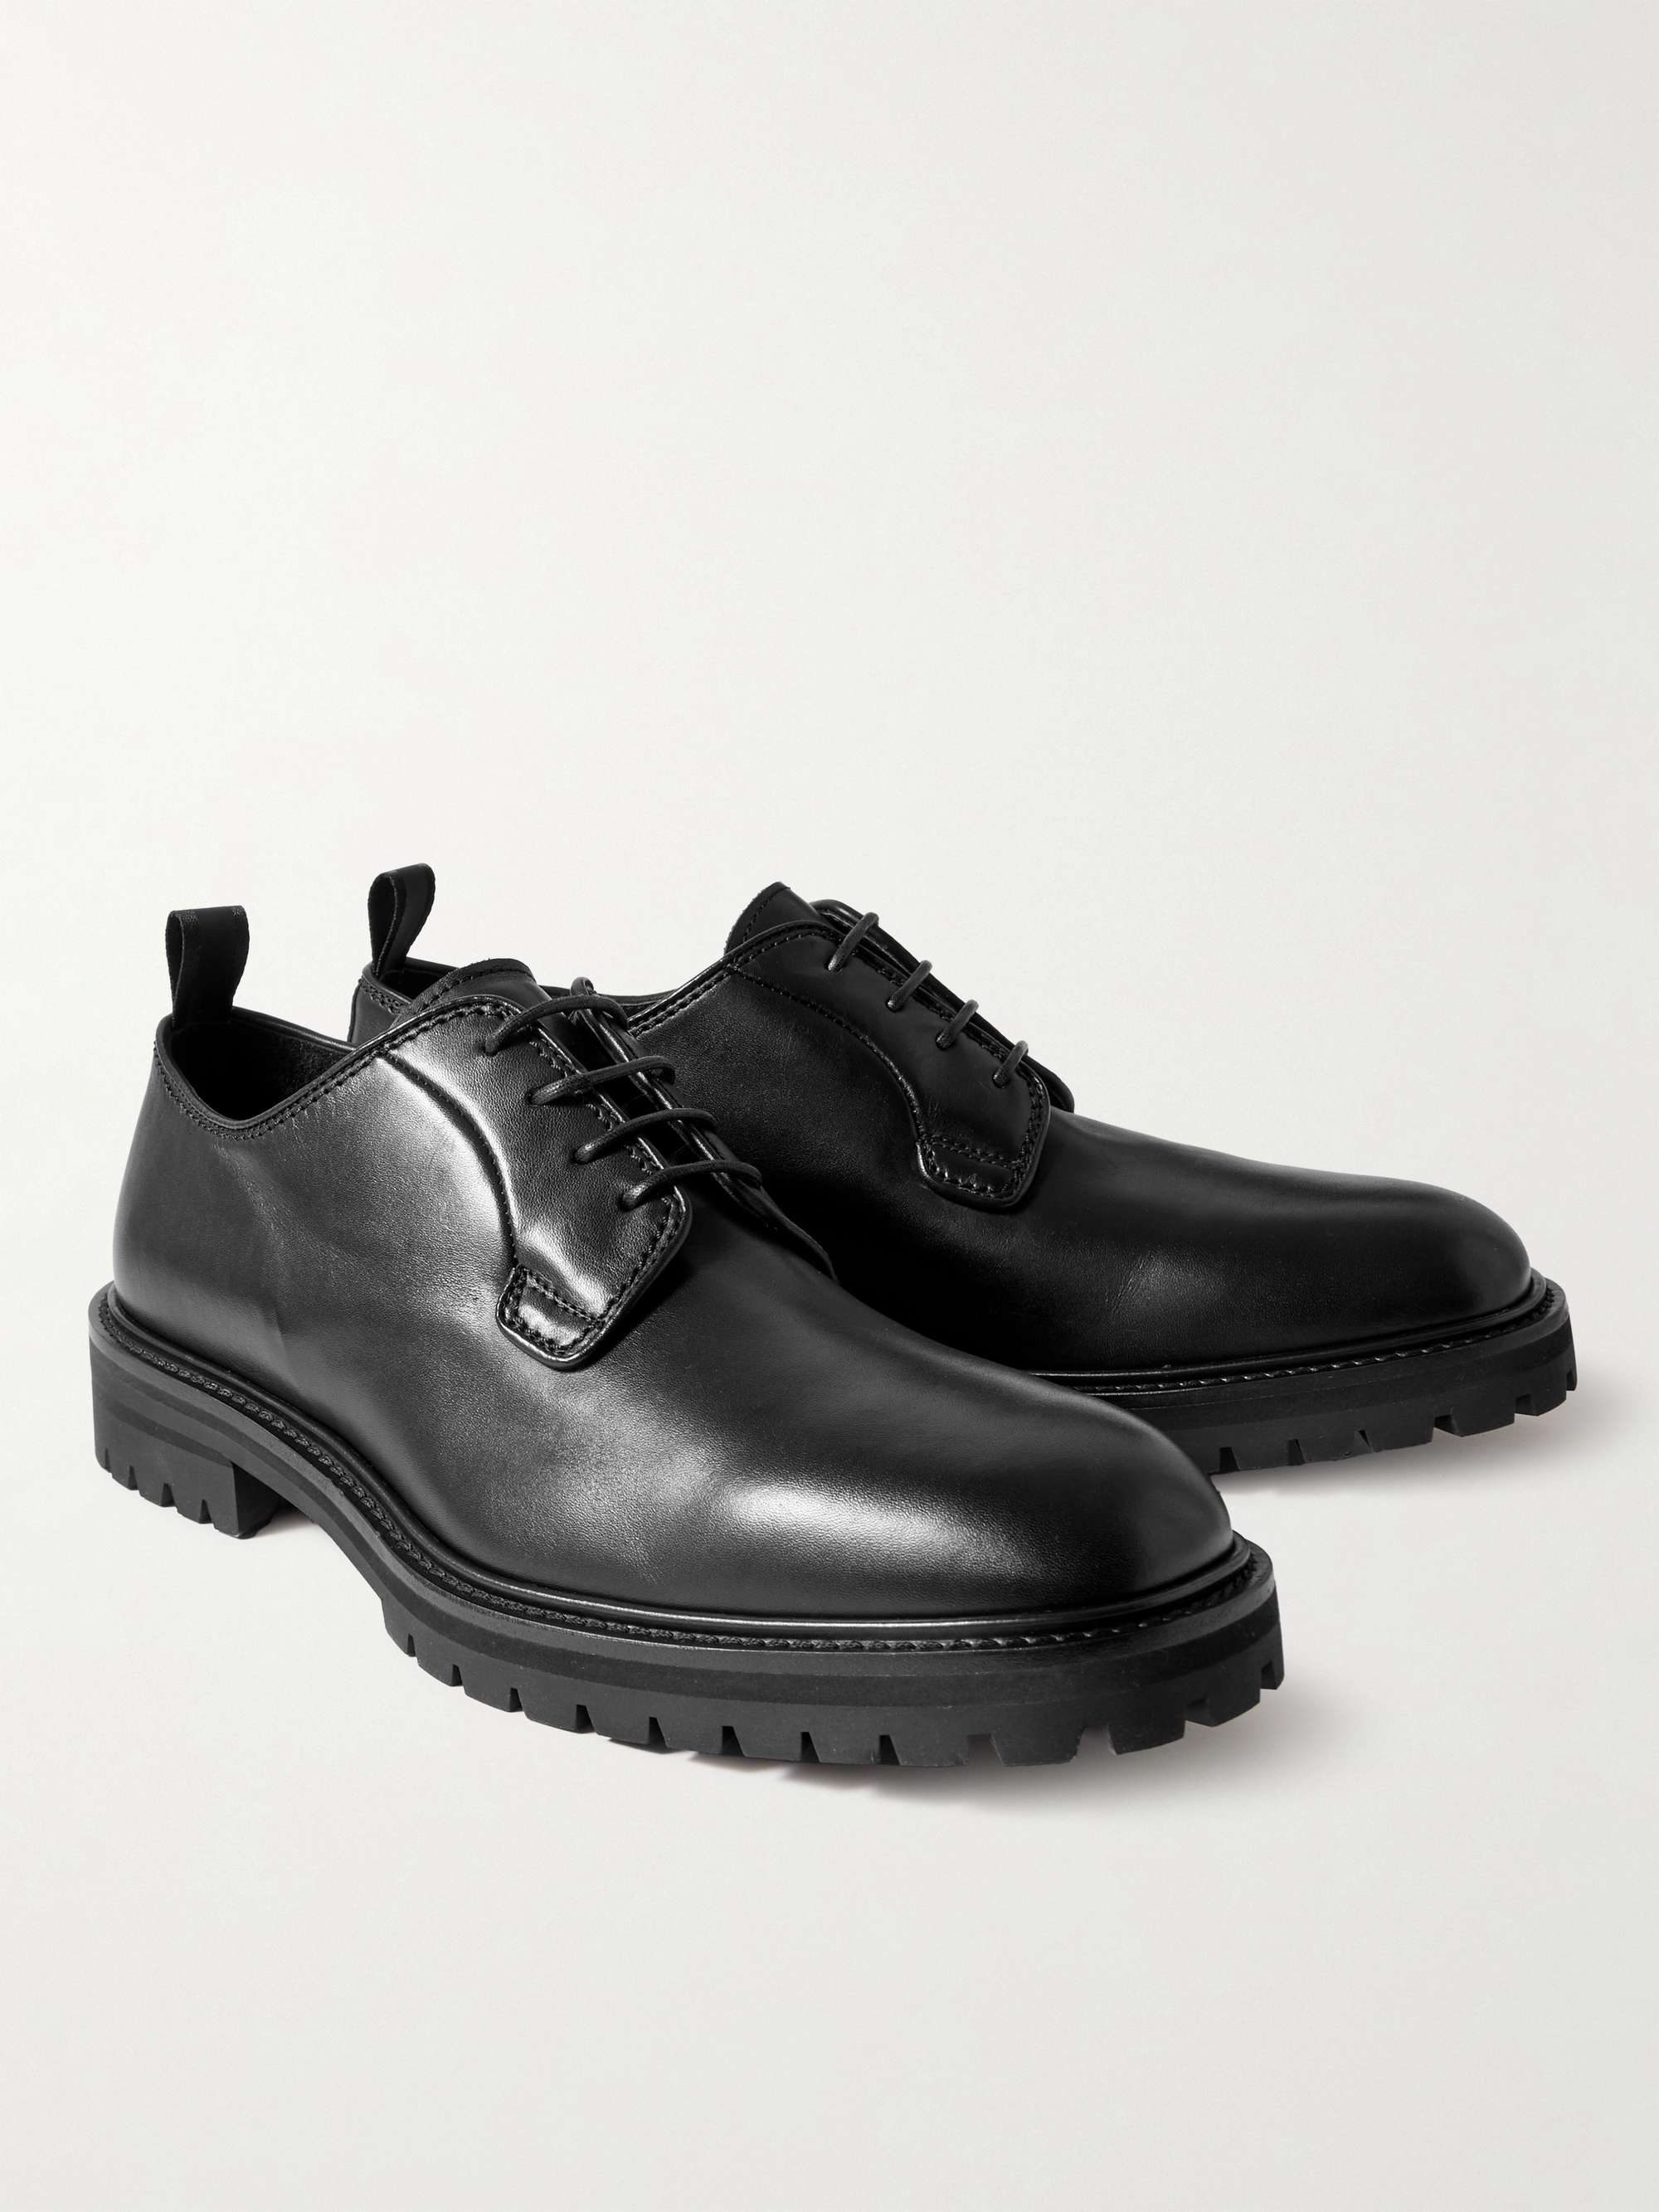 OFFICINE CREATIVE Joss 002 Leather Derby Shoes for Men | MR PORTER